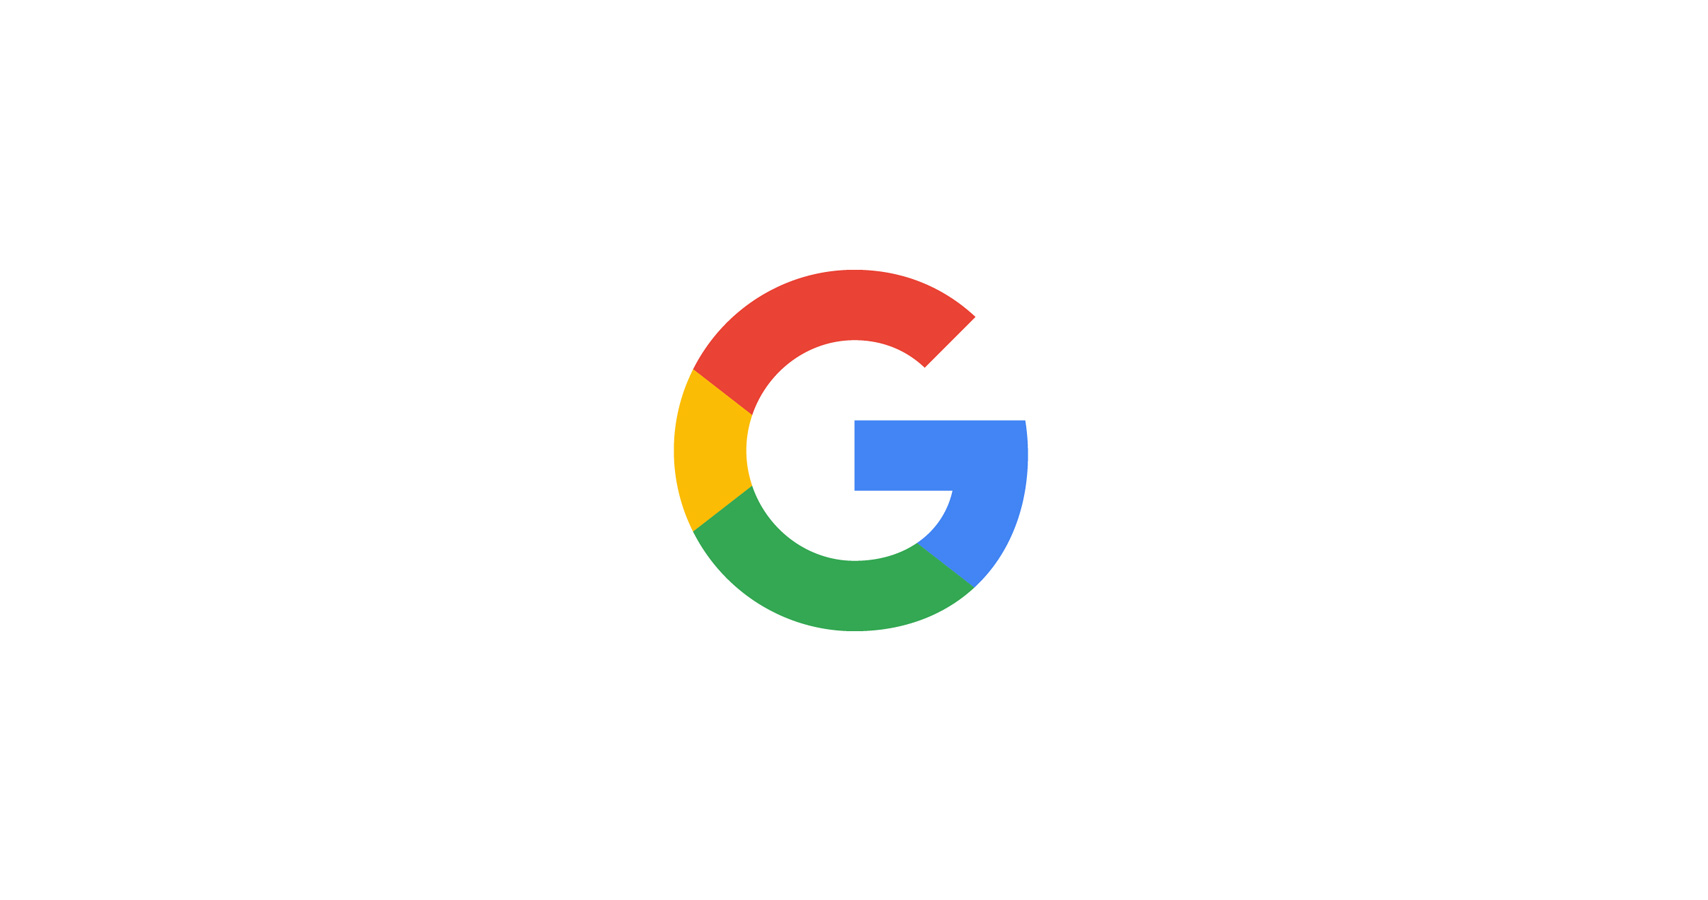 Google pensa di produrre dei Soc proprietari per Chromebook e Pixel phone